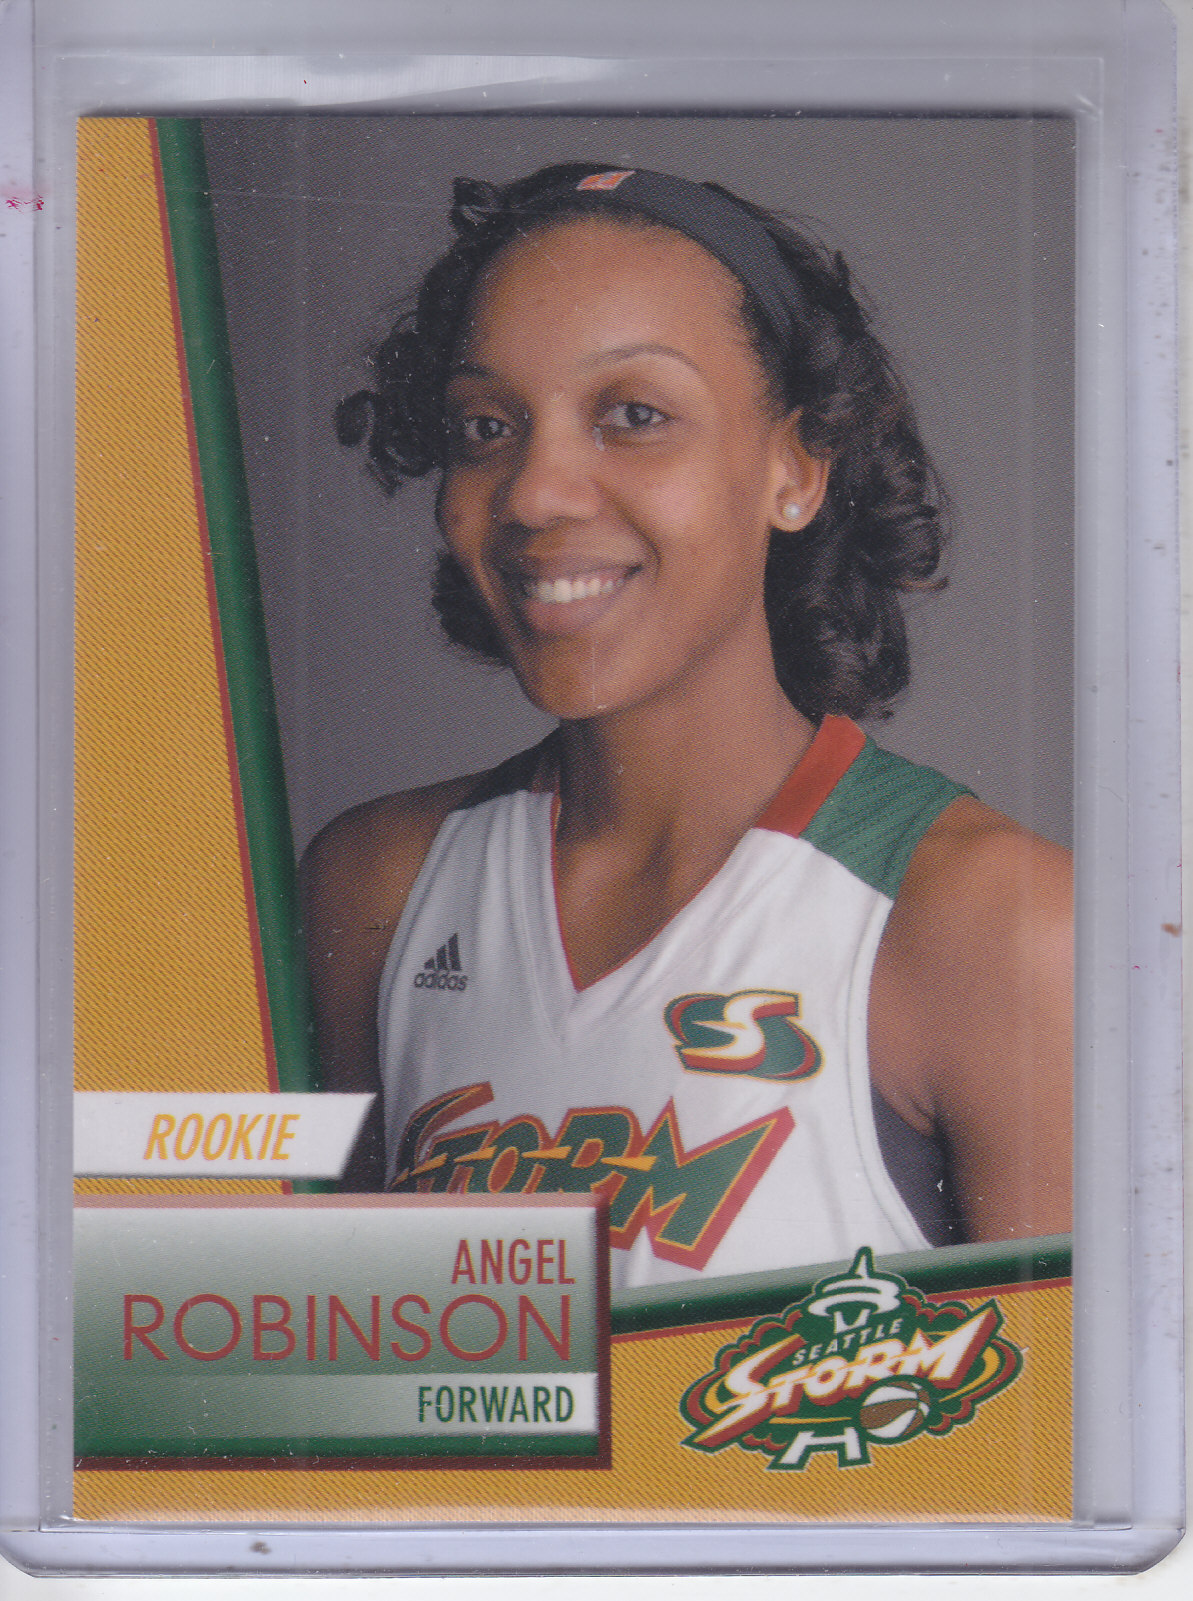  Angel Robinson player image